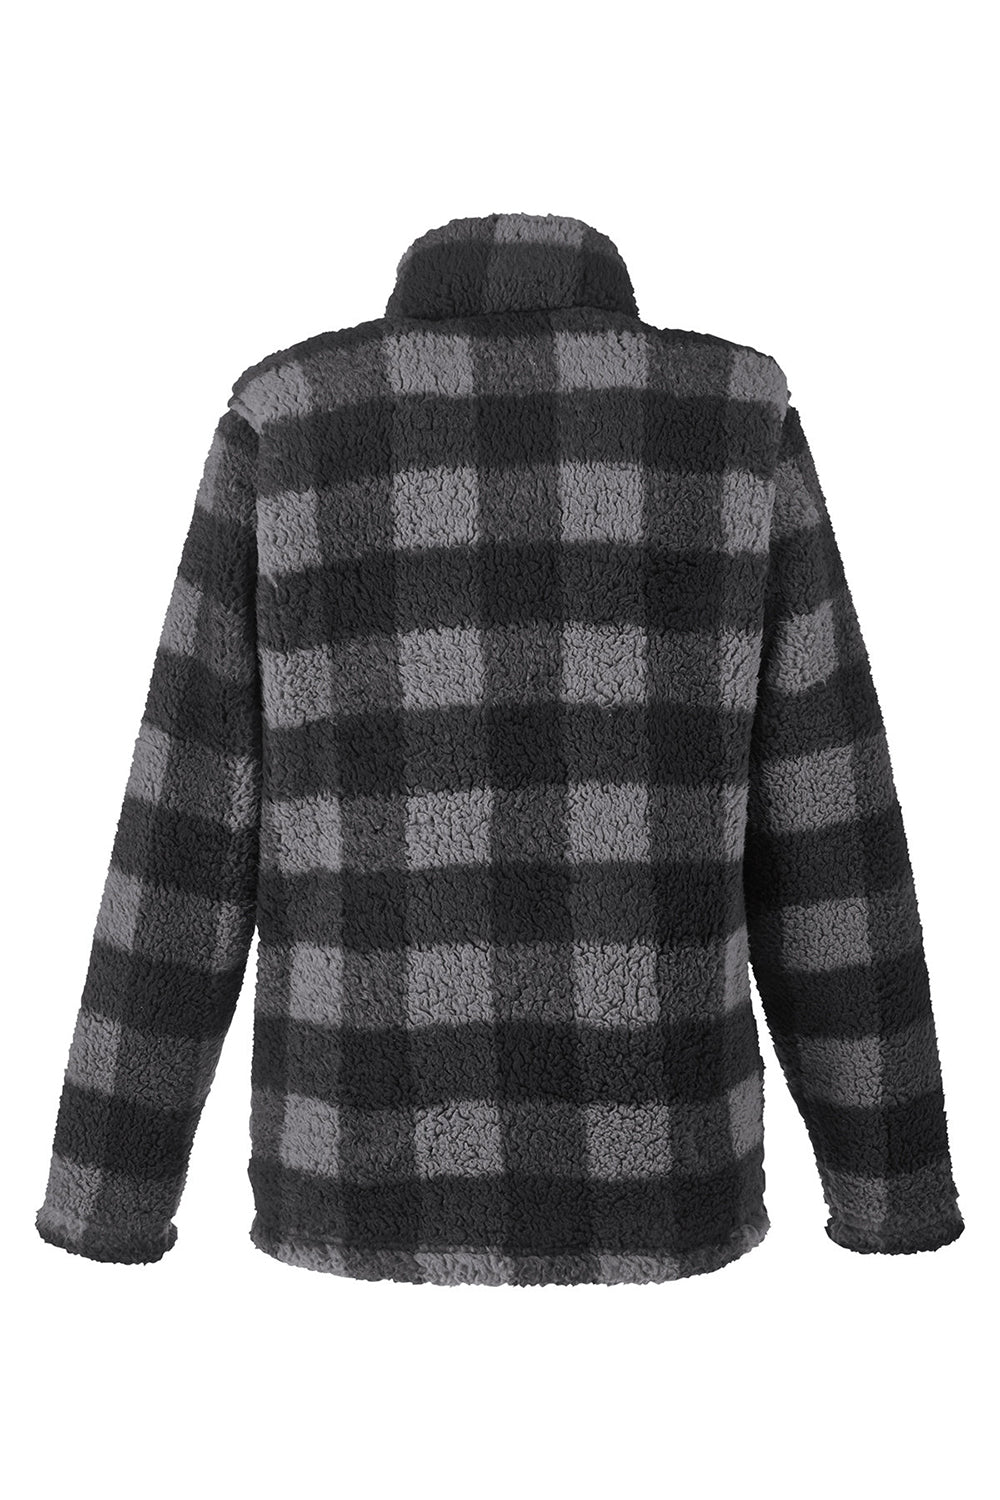 J America JA8451/8451 Womens Epic Sherpa Fleece 1/4 Zip Sweatshirt Black/Charcoal Grey Flat Back